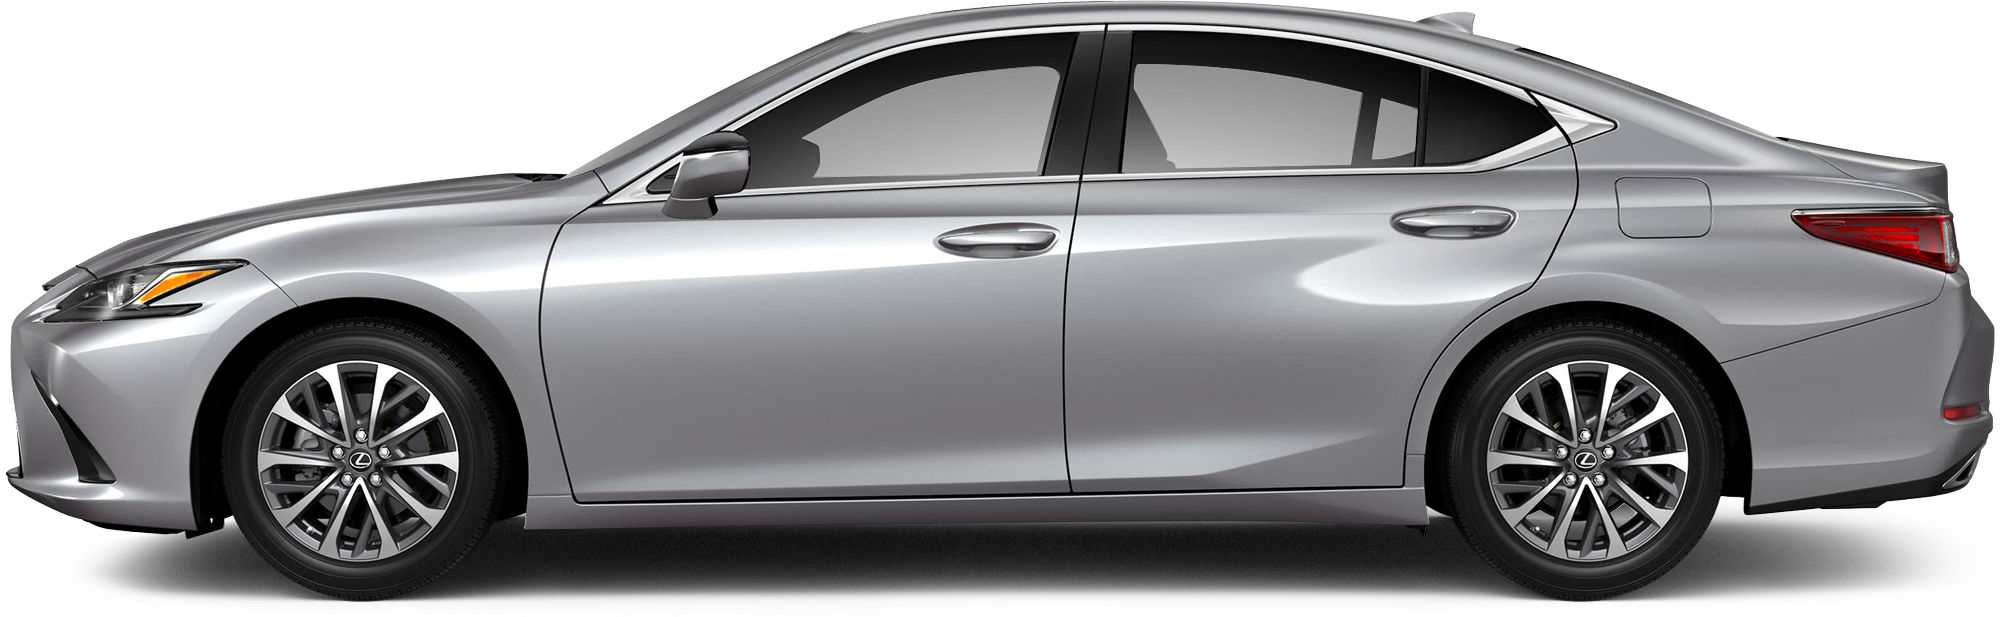 New 2023 Lexus ES 250 Boston | New Sedan Photos, Specs & Details